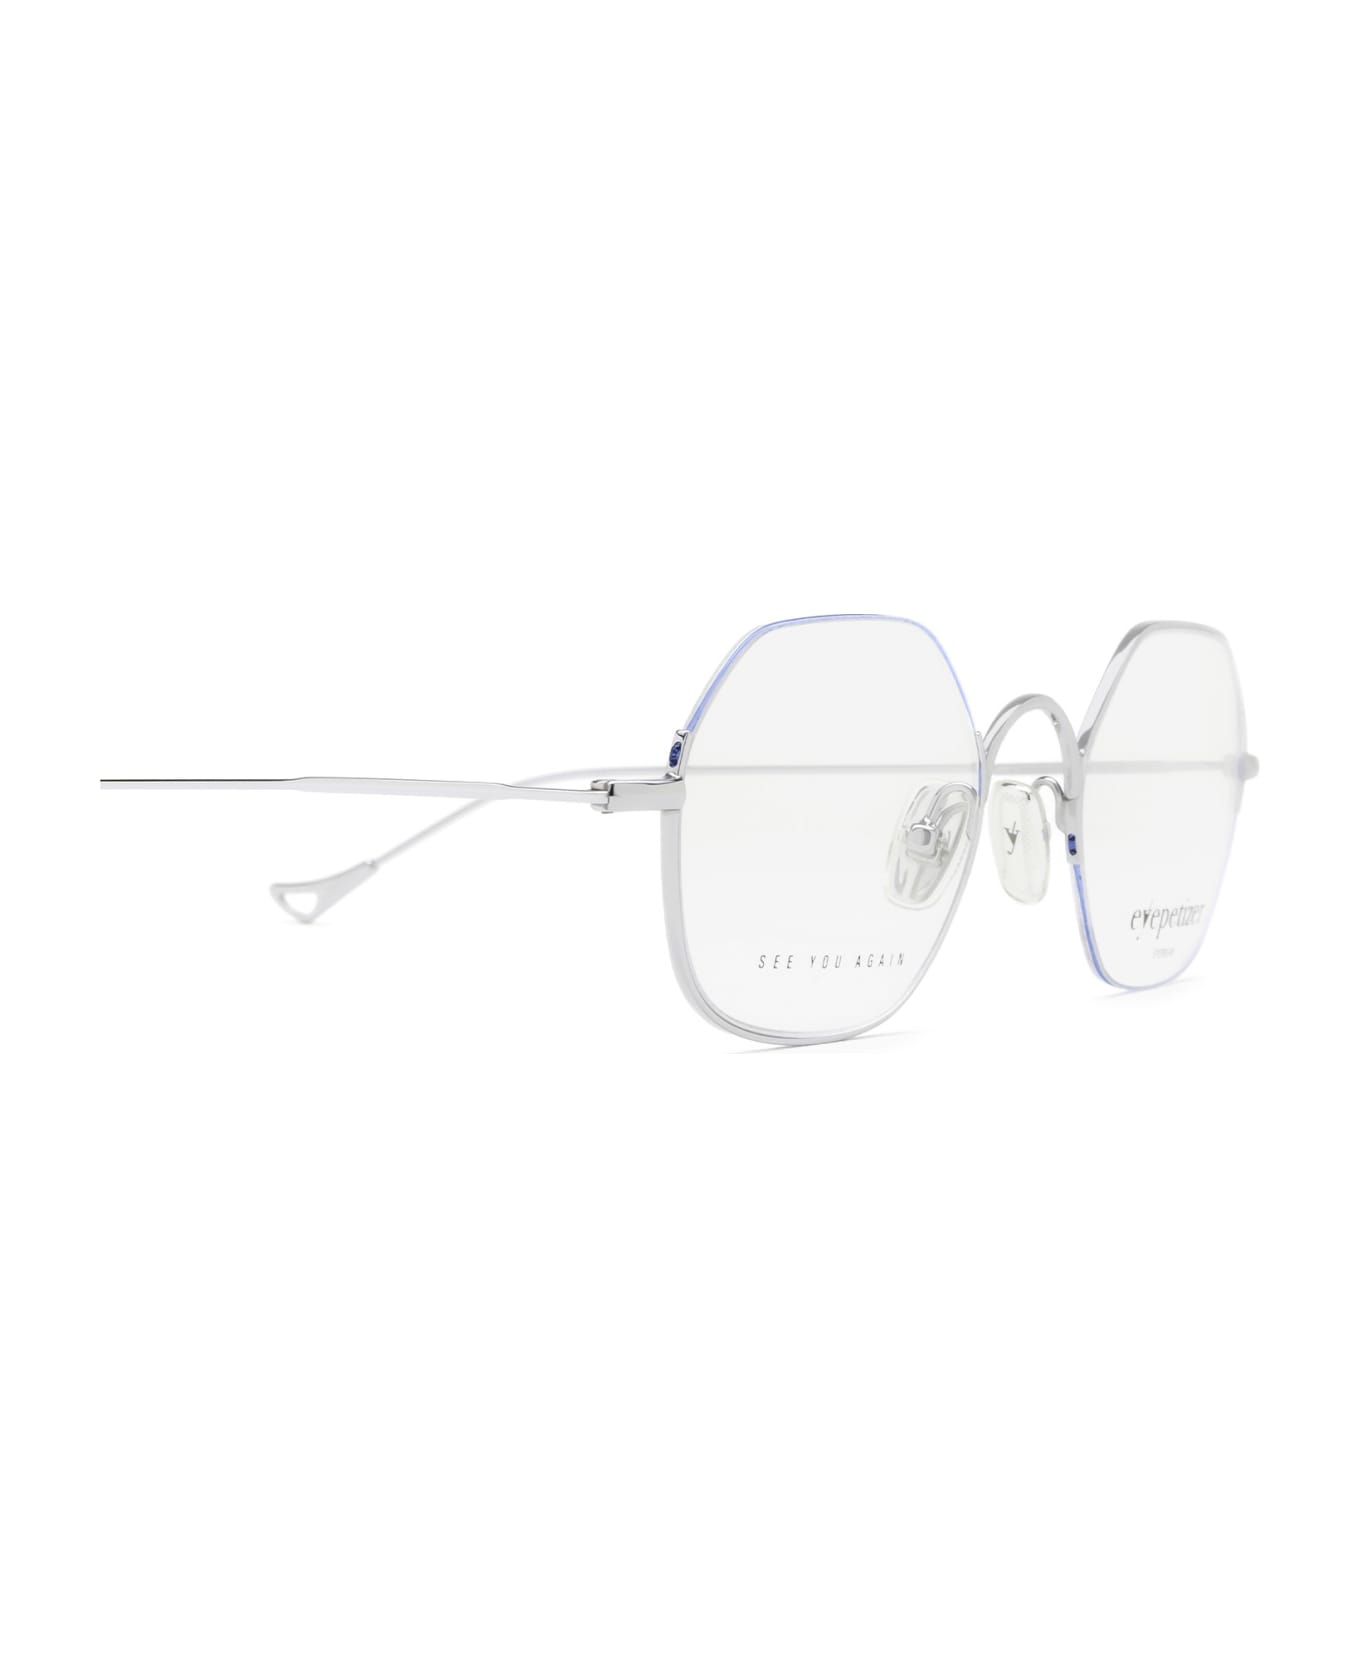 Eyepetizer Ottagono Silver Glasses - Silver